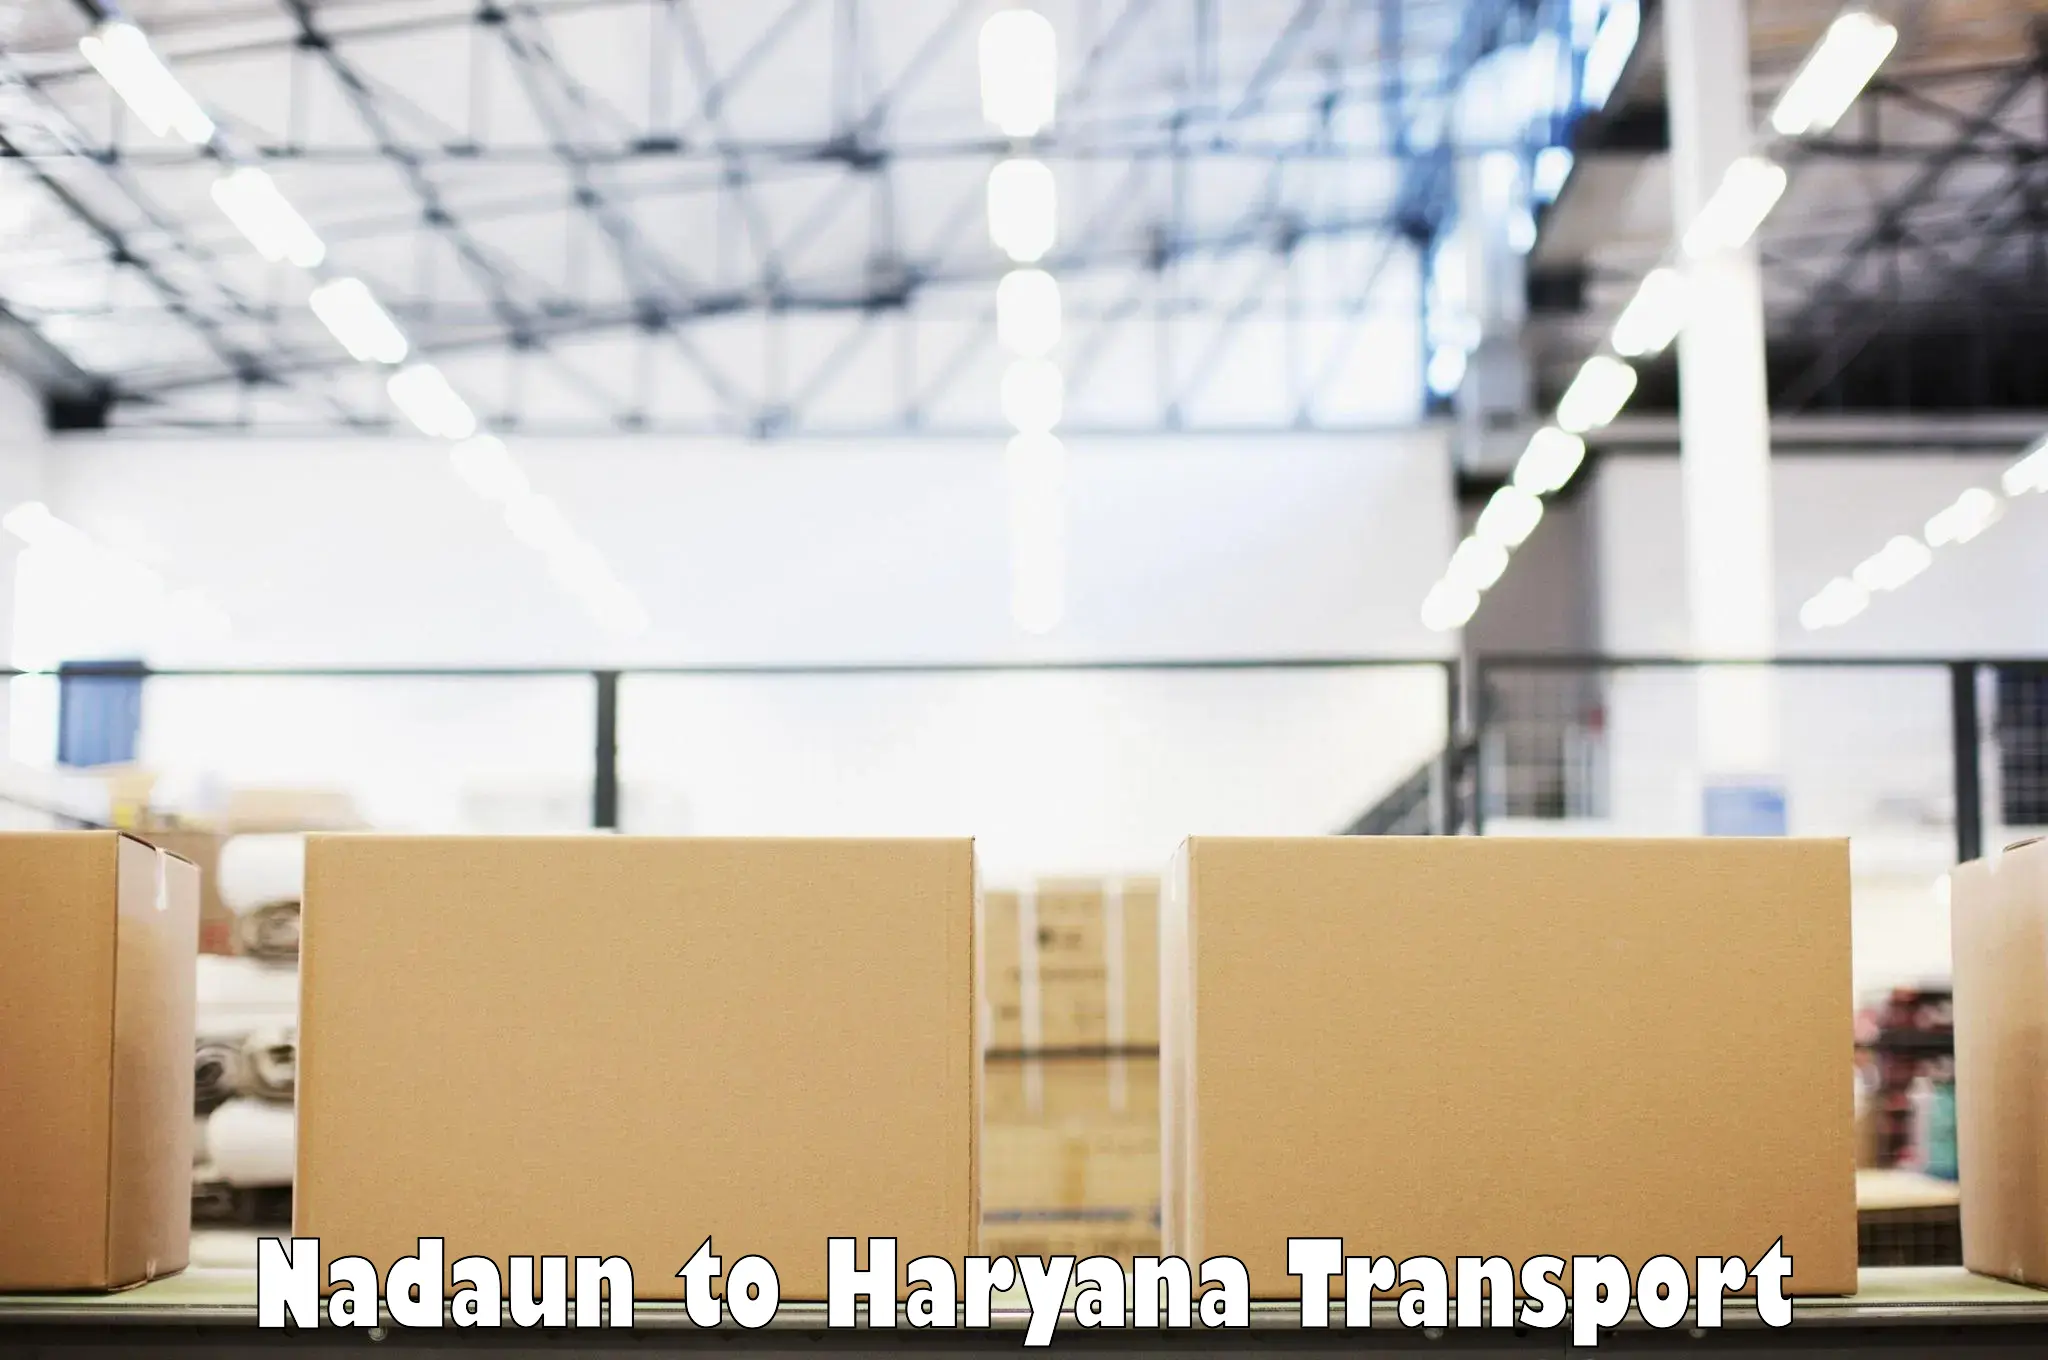 Transport in sharing in Nadaun to Haryana